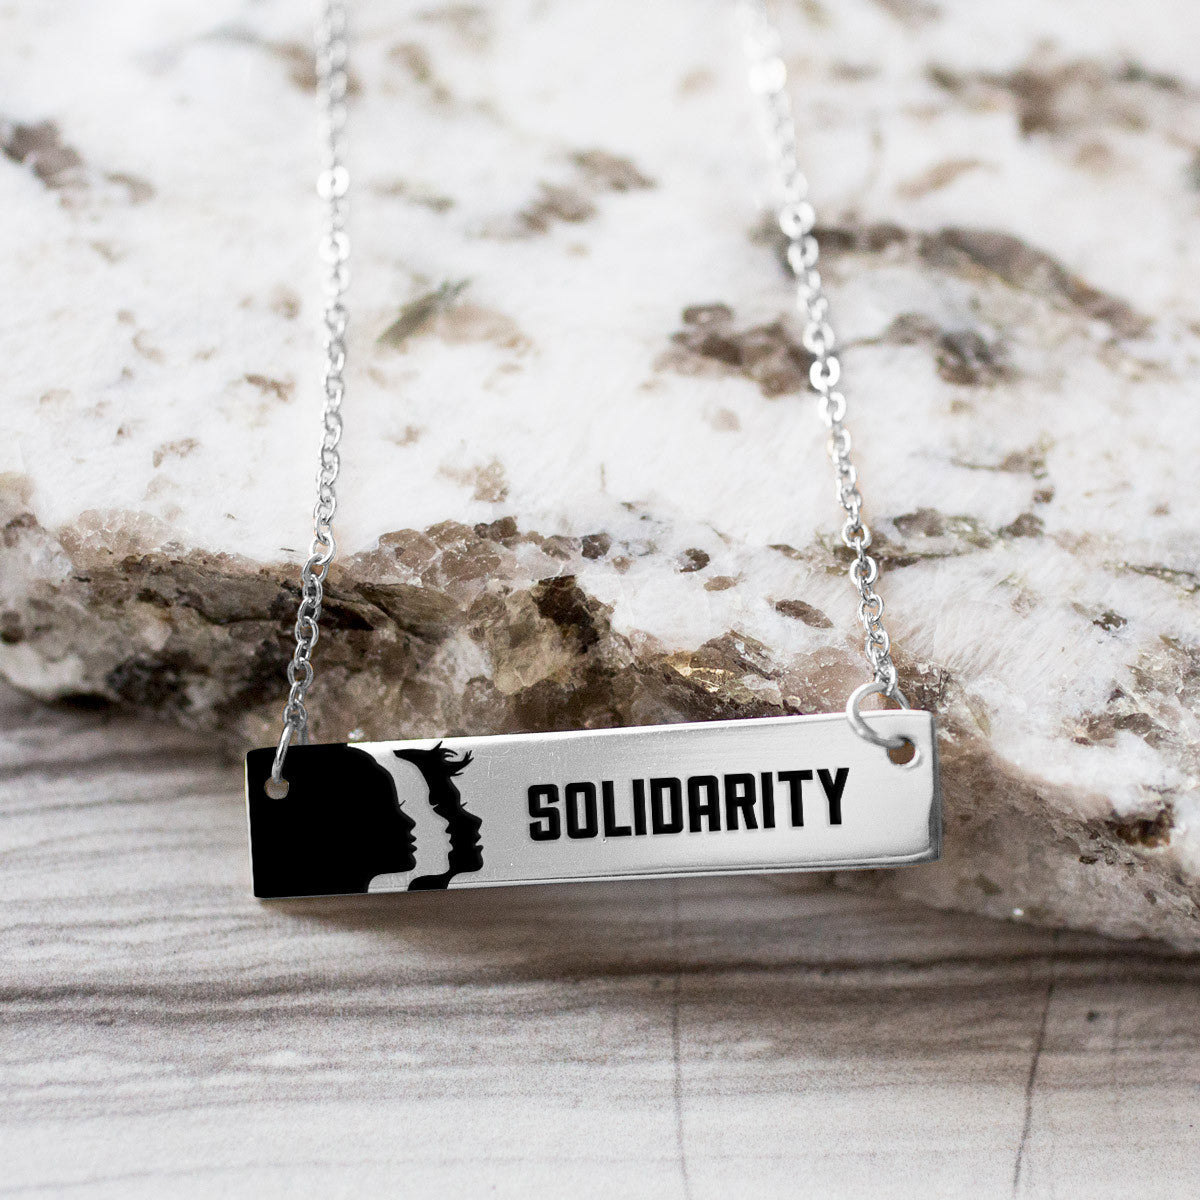 Solidarity Gold / Silver Bar Necklace - pipercleo.com